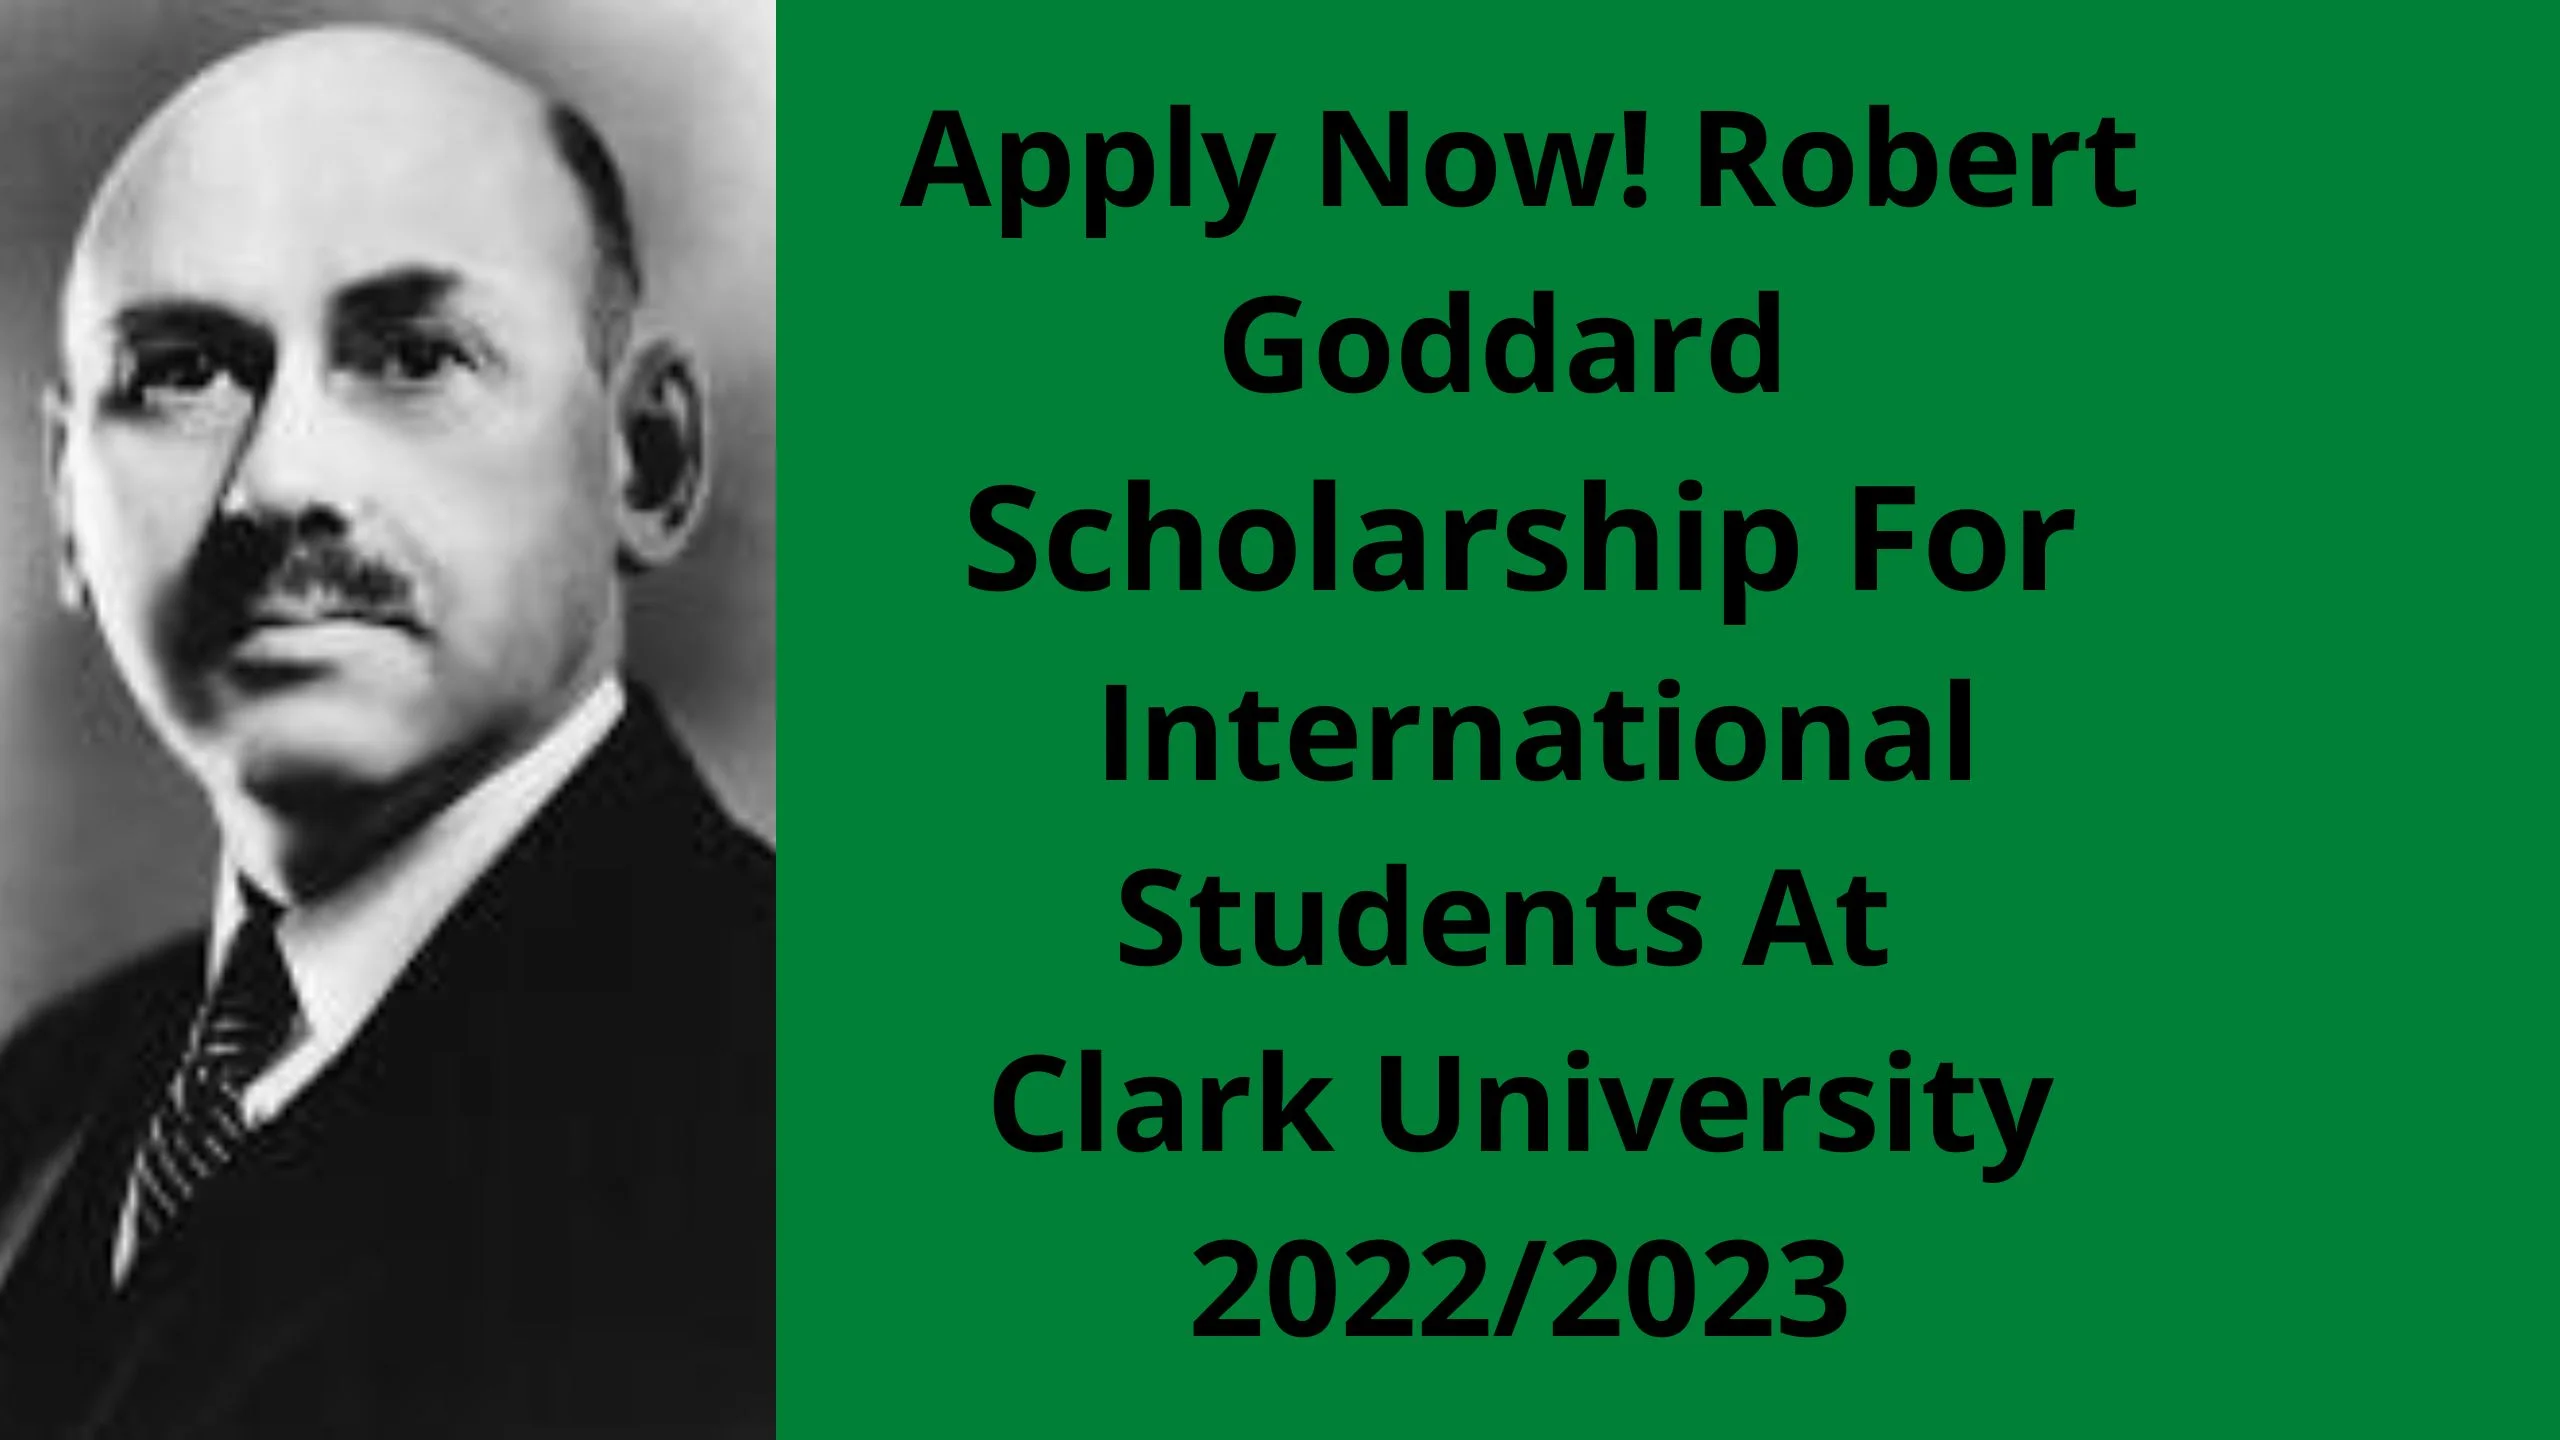 Apply Now! Robert Goddard Scholarship For International Students At Clark University 20222023